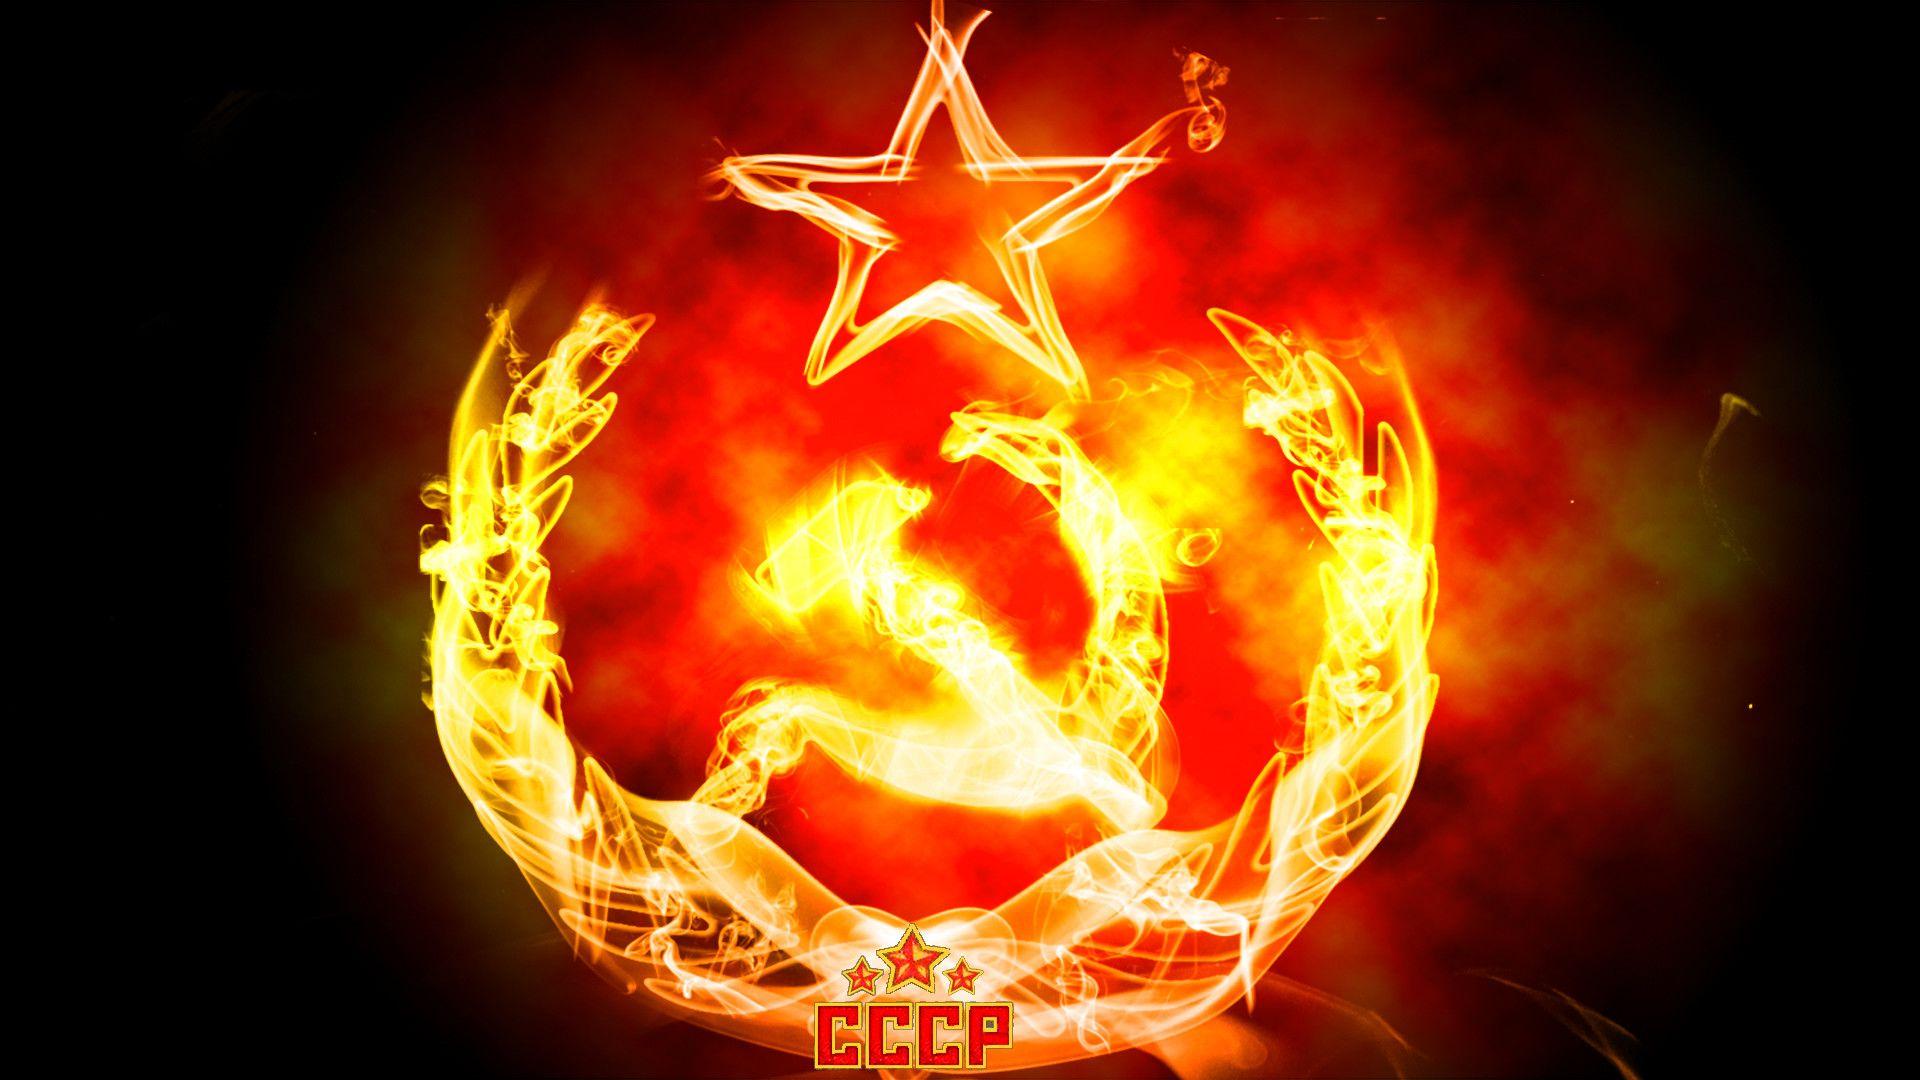 USSR Wallpaper